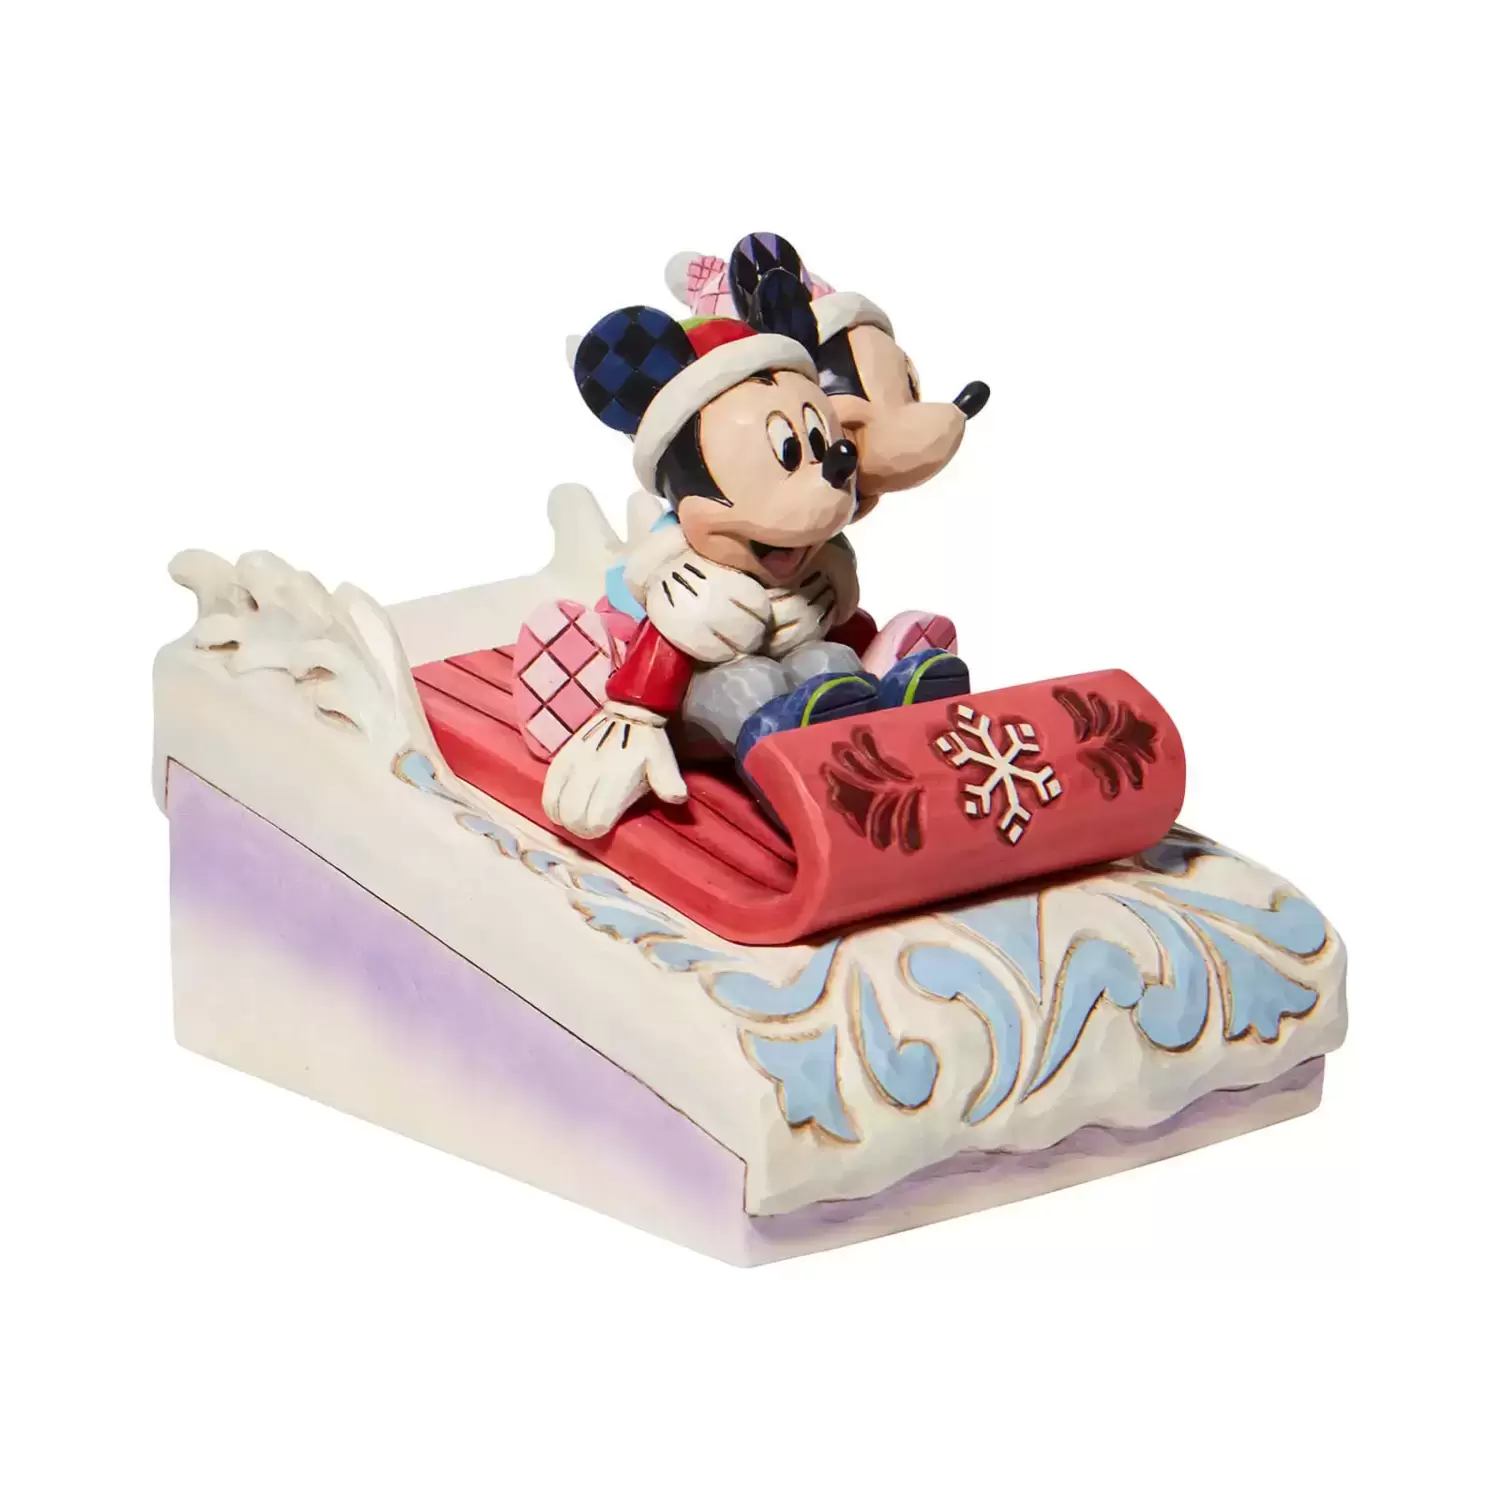 Disney Traditions by Jim Shore - Mickey & Minnie Sledding